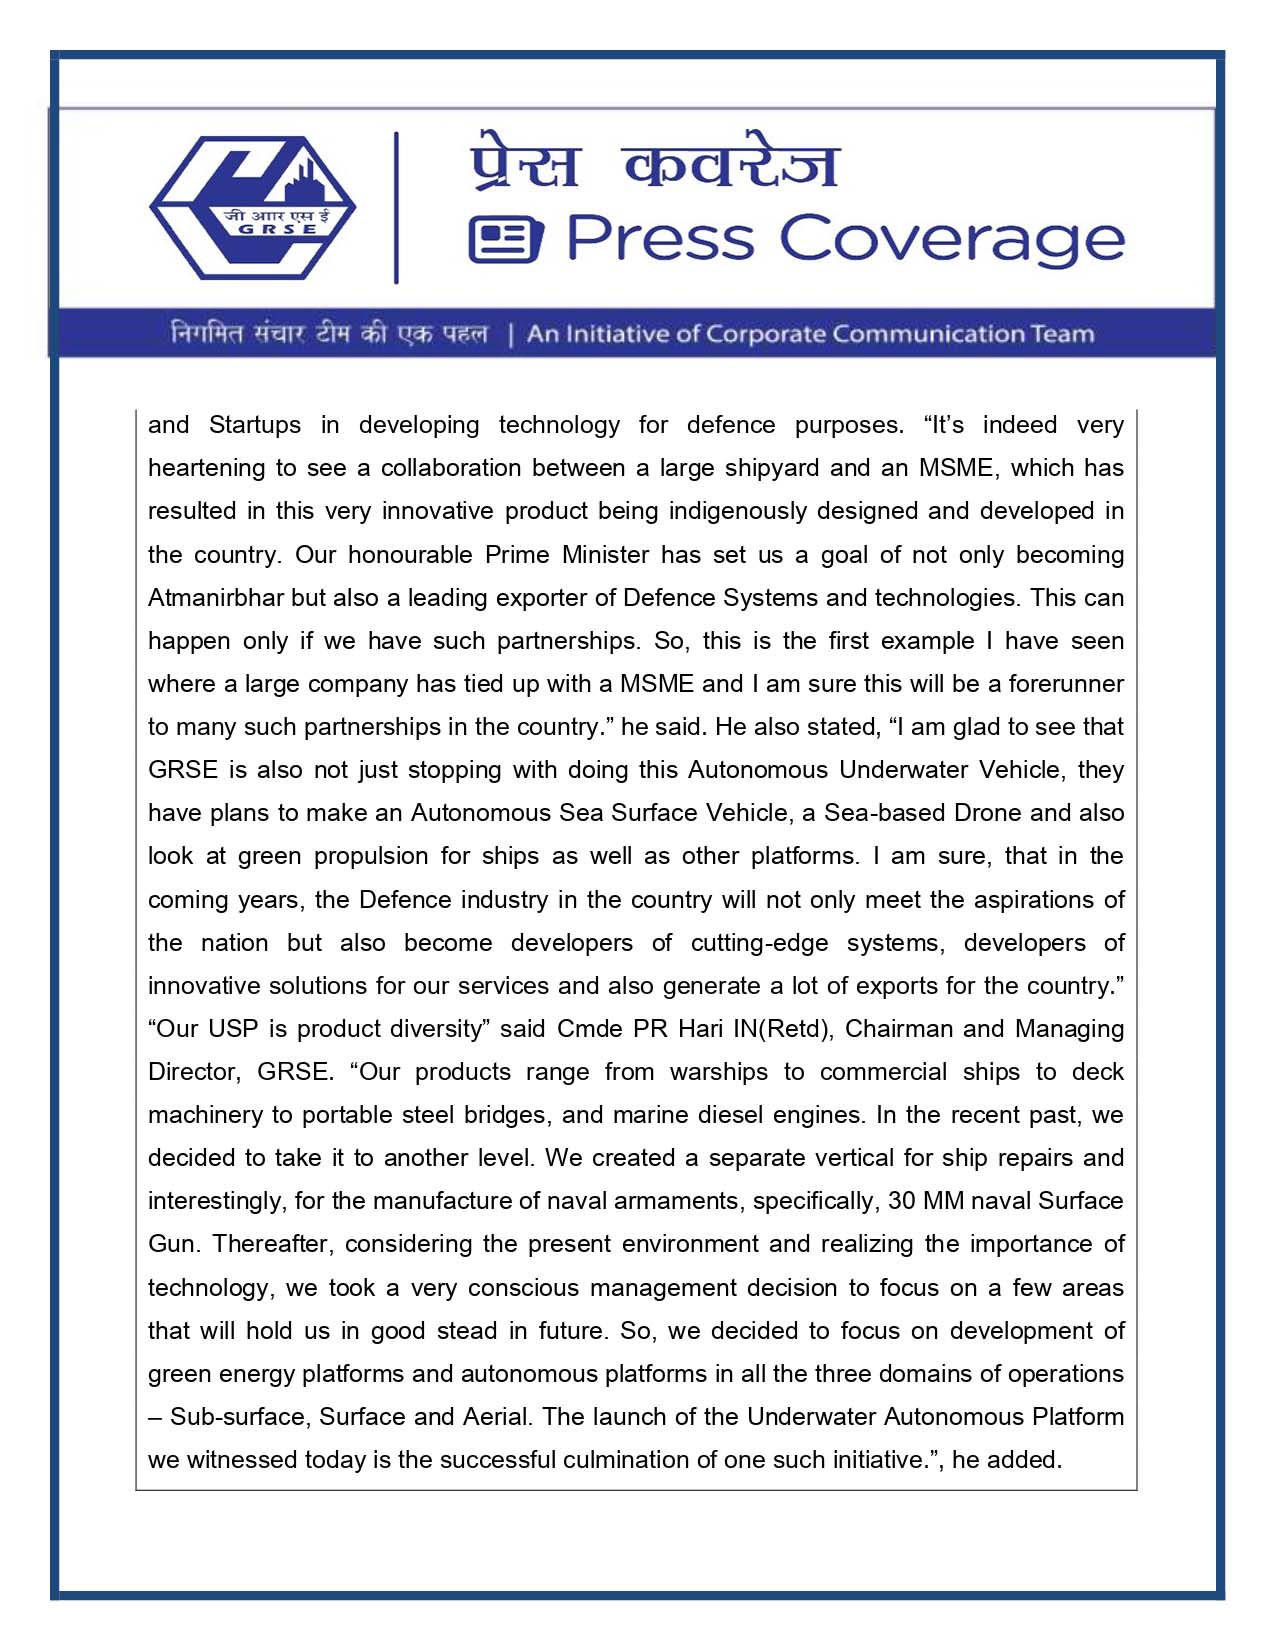 Press Coverage : Press Information Bureau, 28 Jul 23 : DRDO Chairman lauds GRSE's initiative on Autonomous Vessels in the Maritime Domain